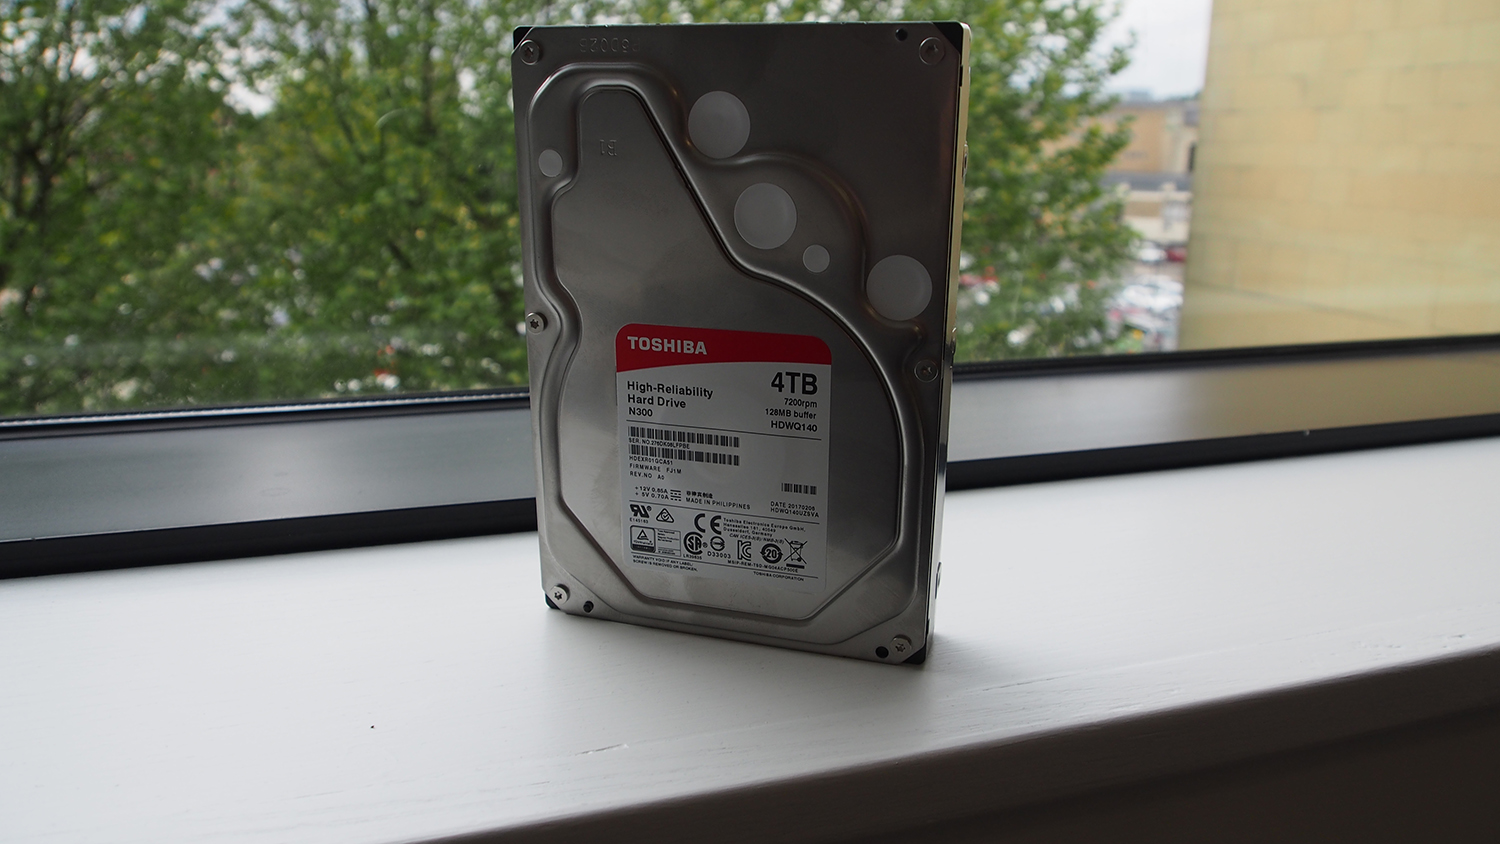 Toshiba N300 3.5-inch hard drive review